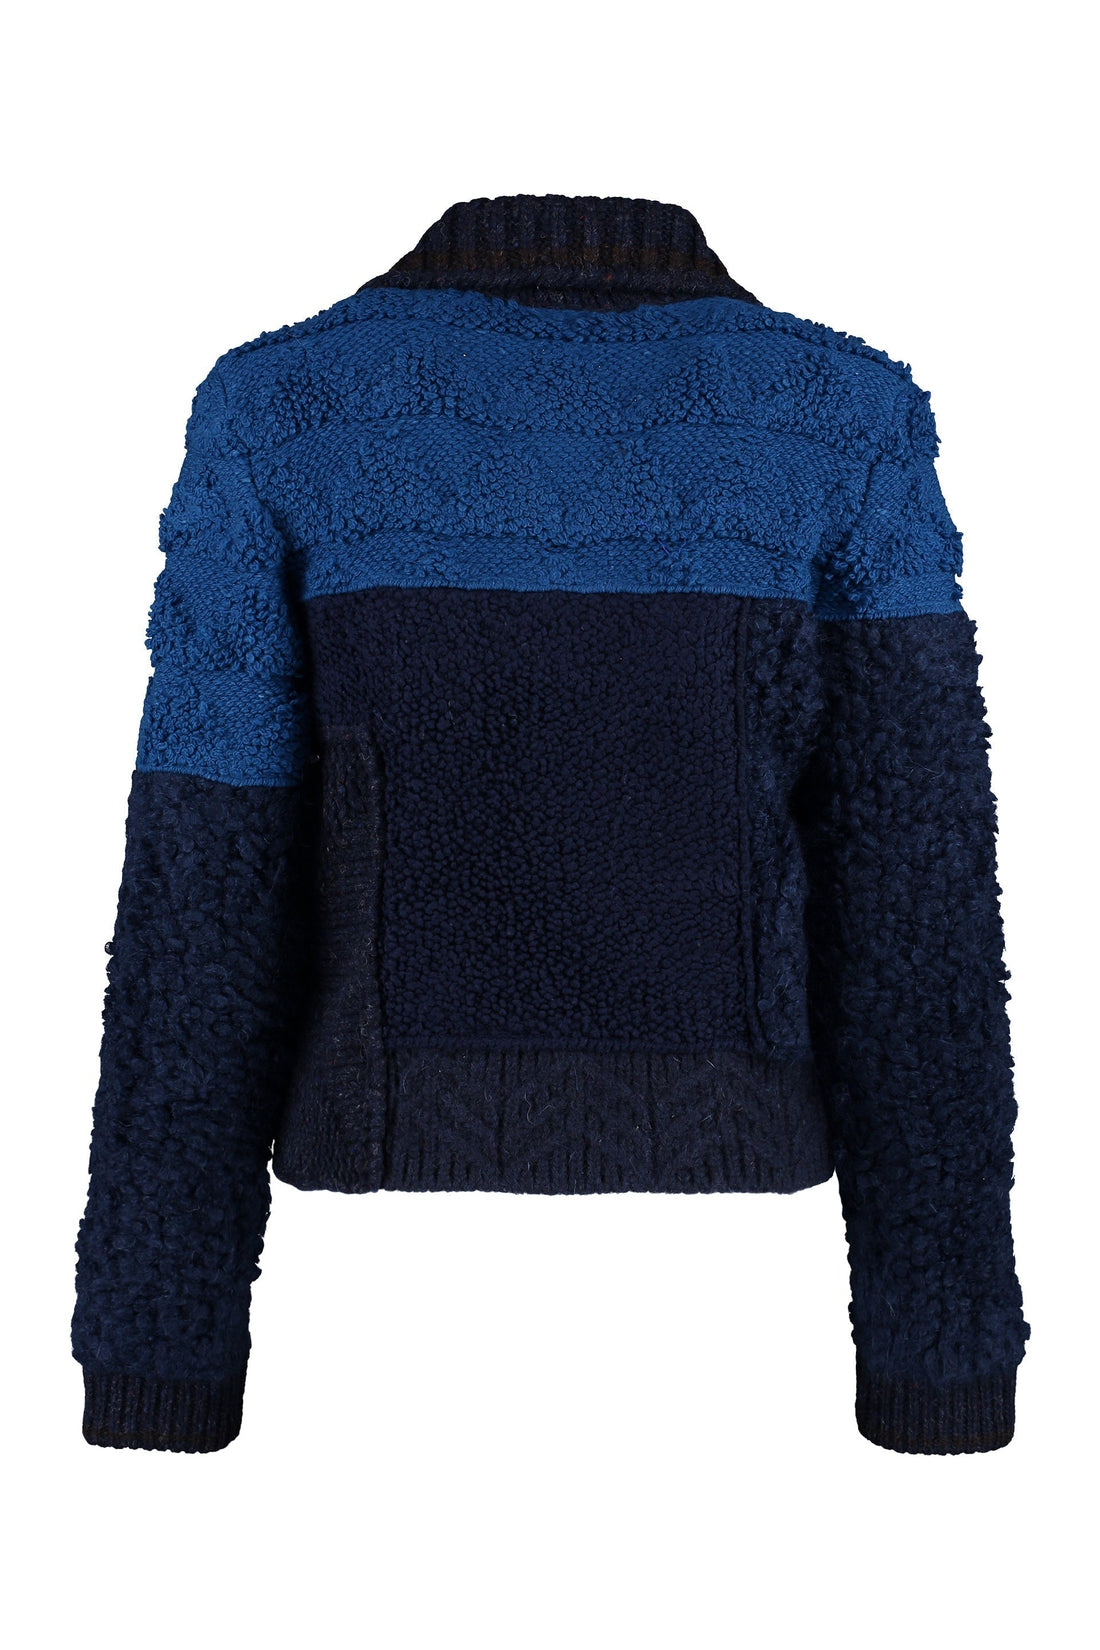 Bottega Veneta-OUTLET-SALE-Wool V-neck sweater-ARCHIVIST